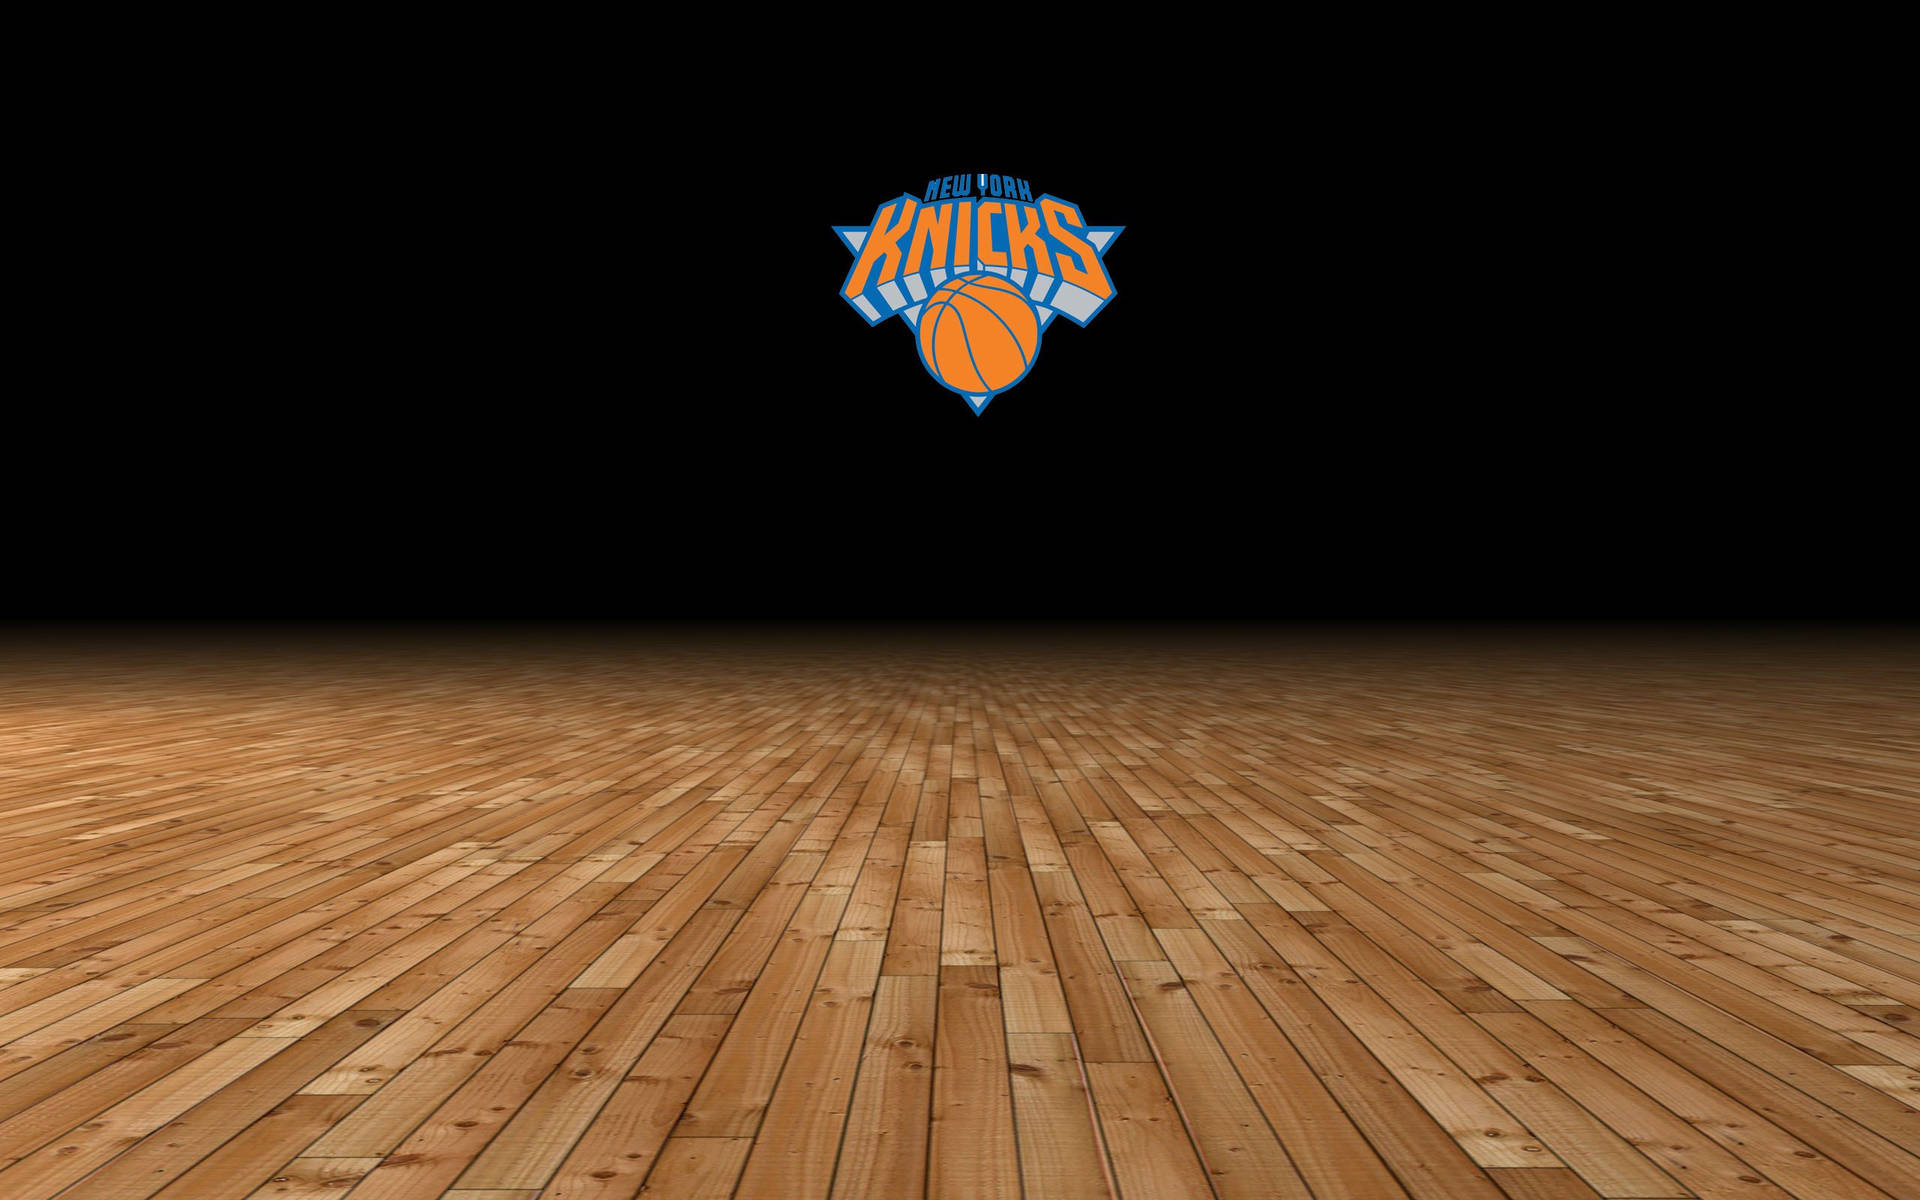 New York Knicks Wooden Floor